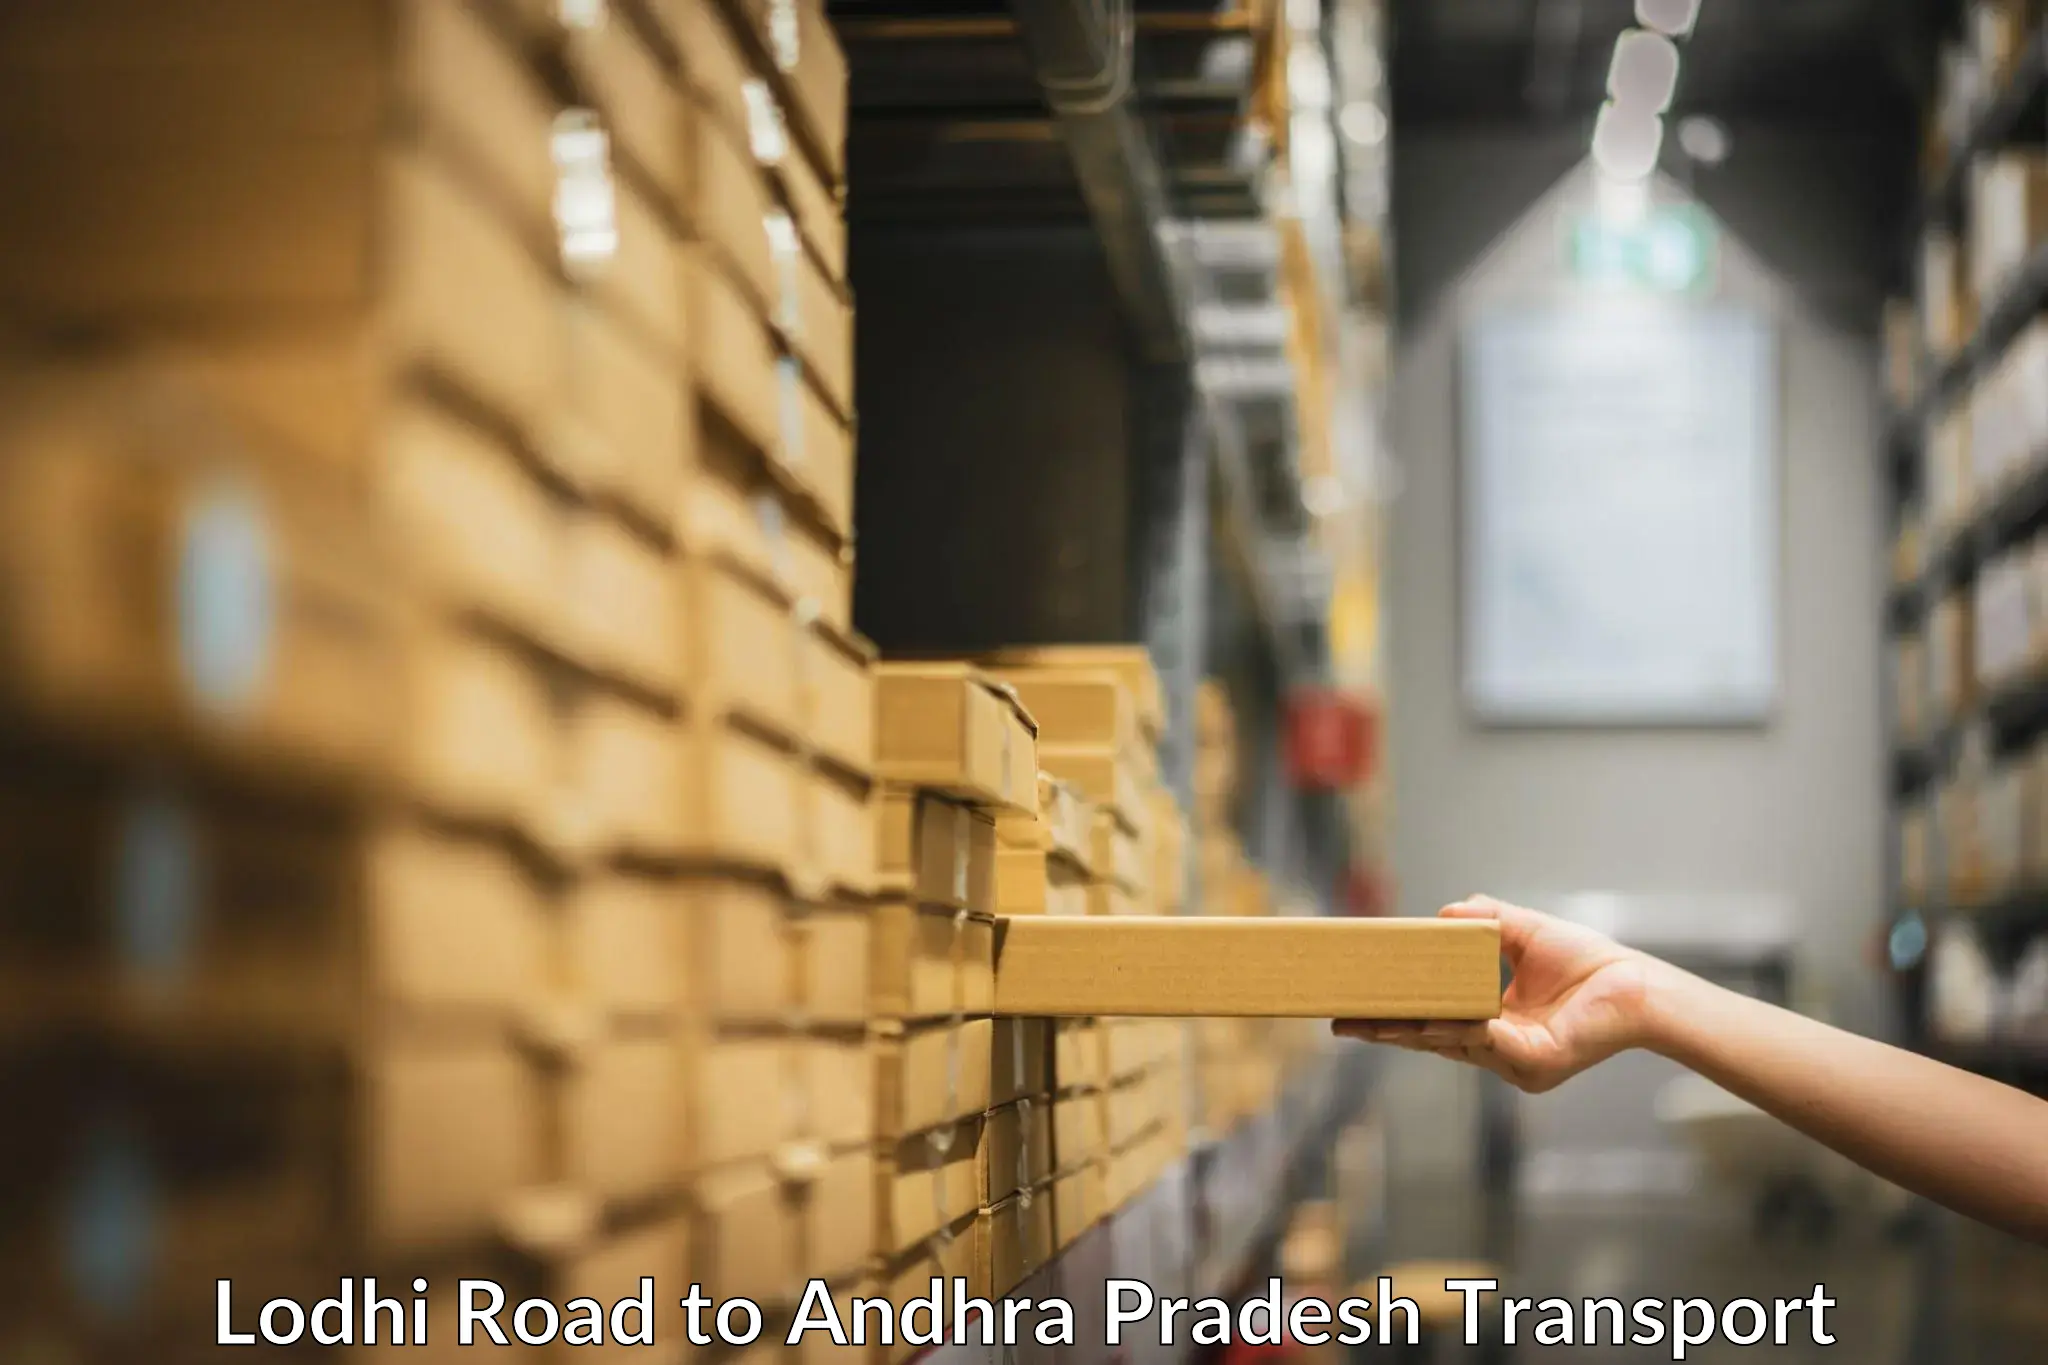 Transport in sharing in Lodhi Road to Uravakonda